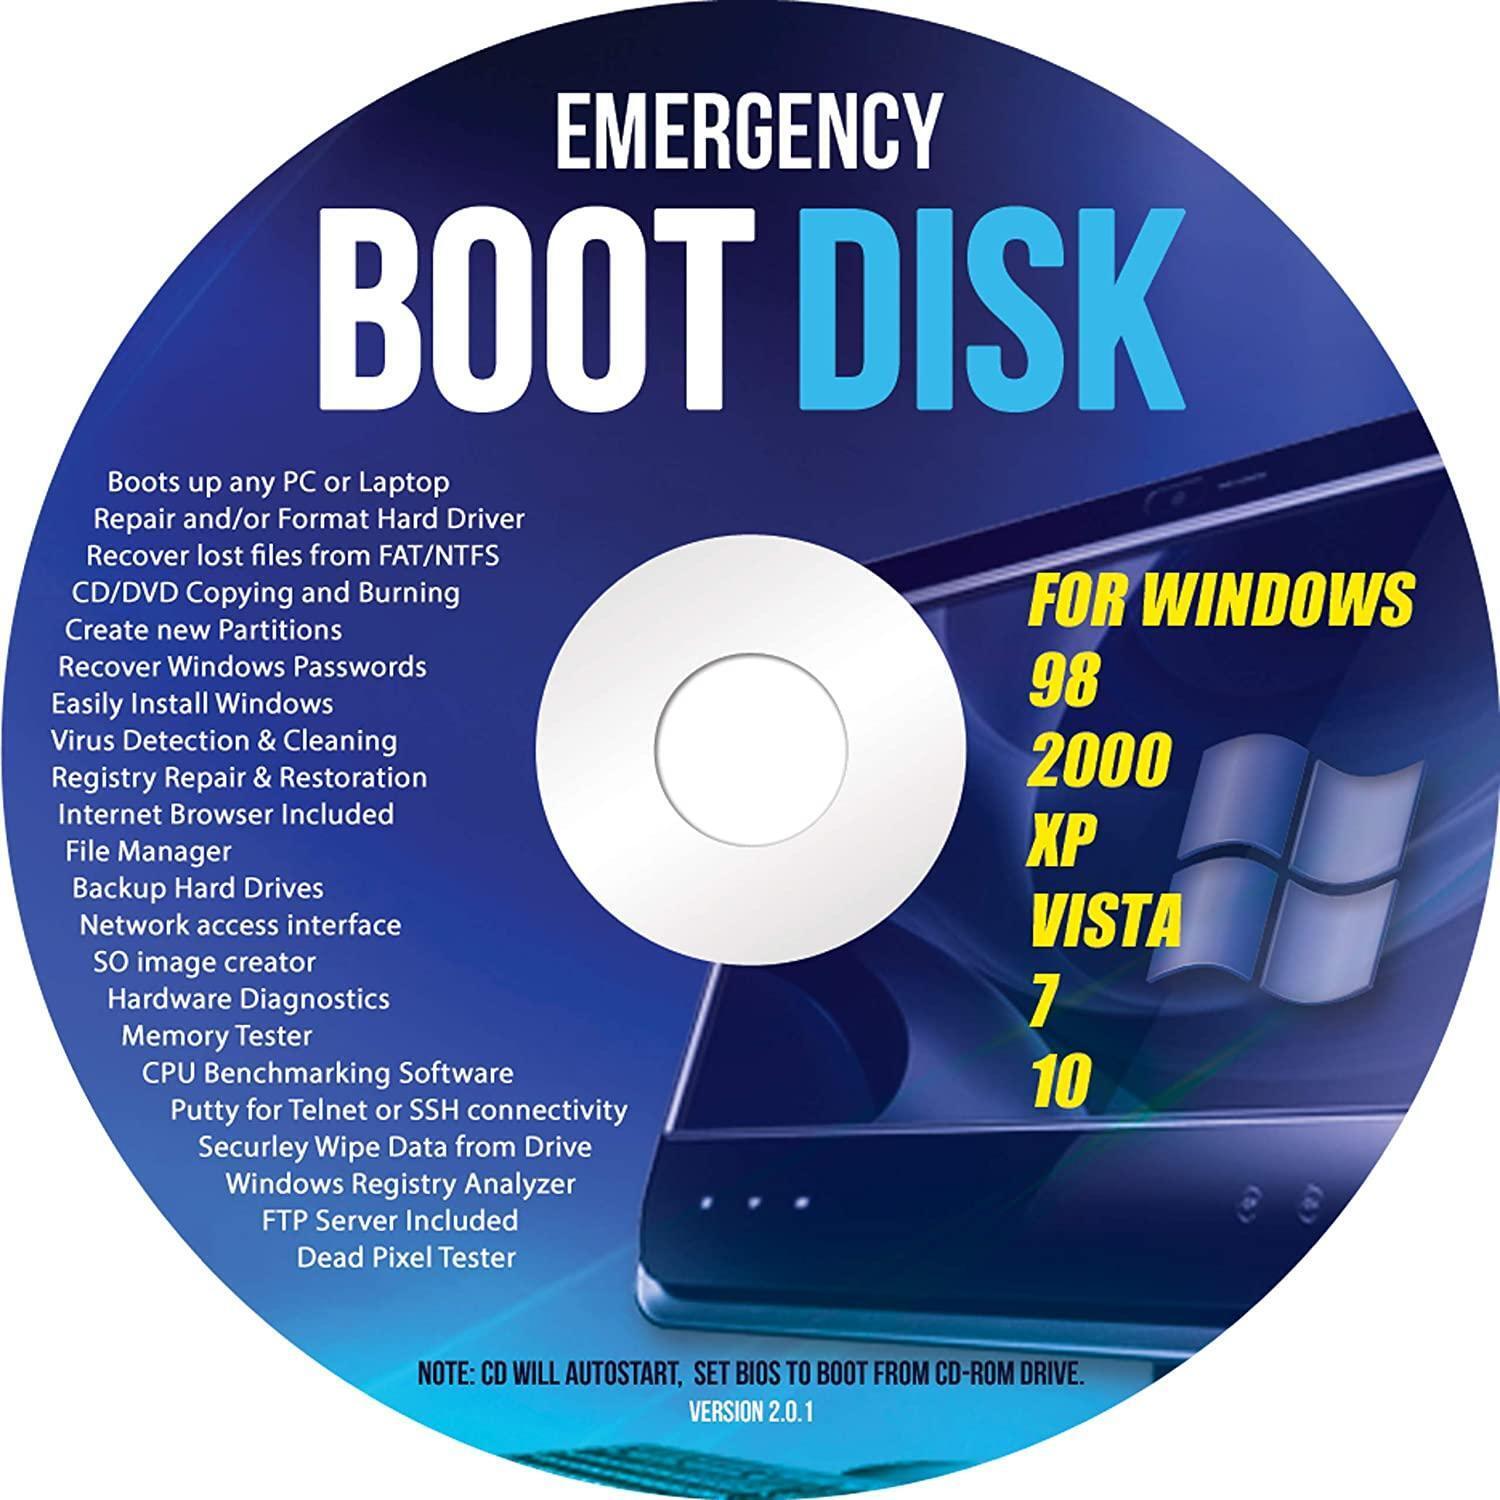 Windows Emergency Boot Disk - for Windows 98, 2000, Xp, Vista, 7, 10 Pc Repair D